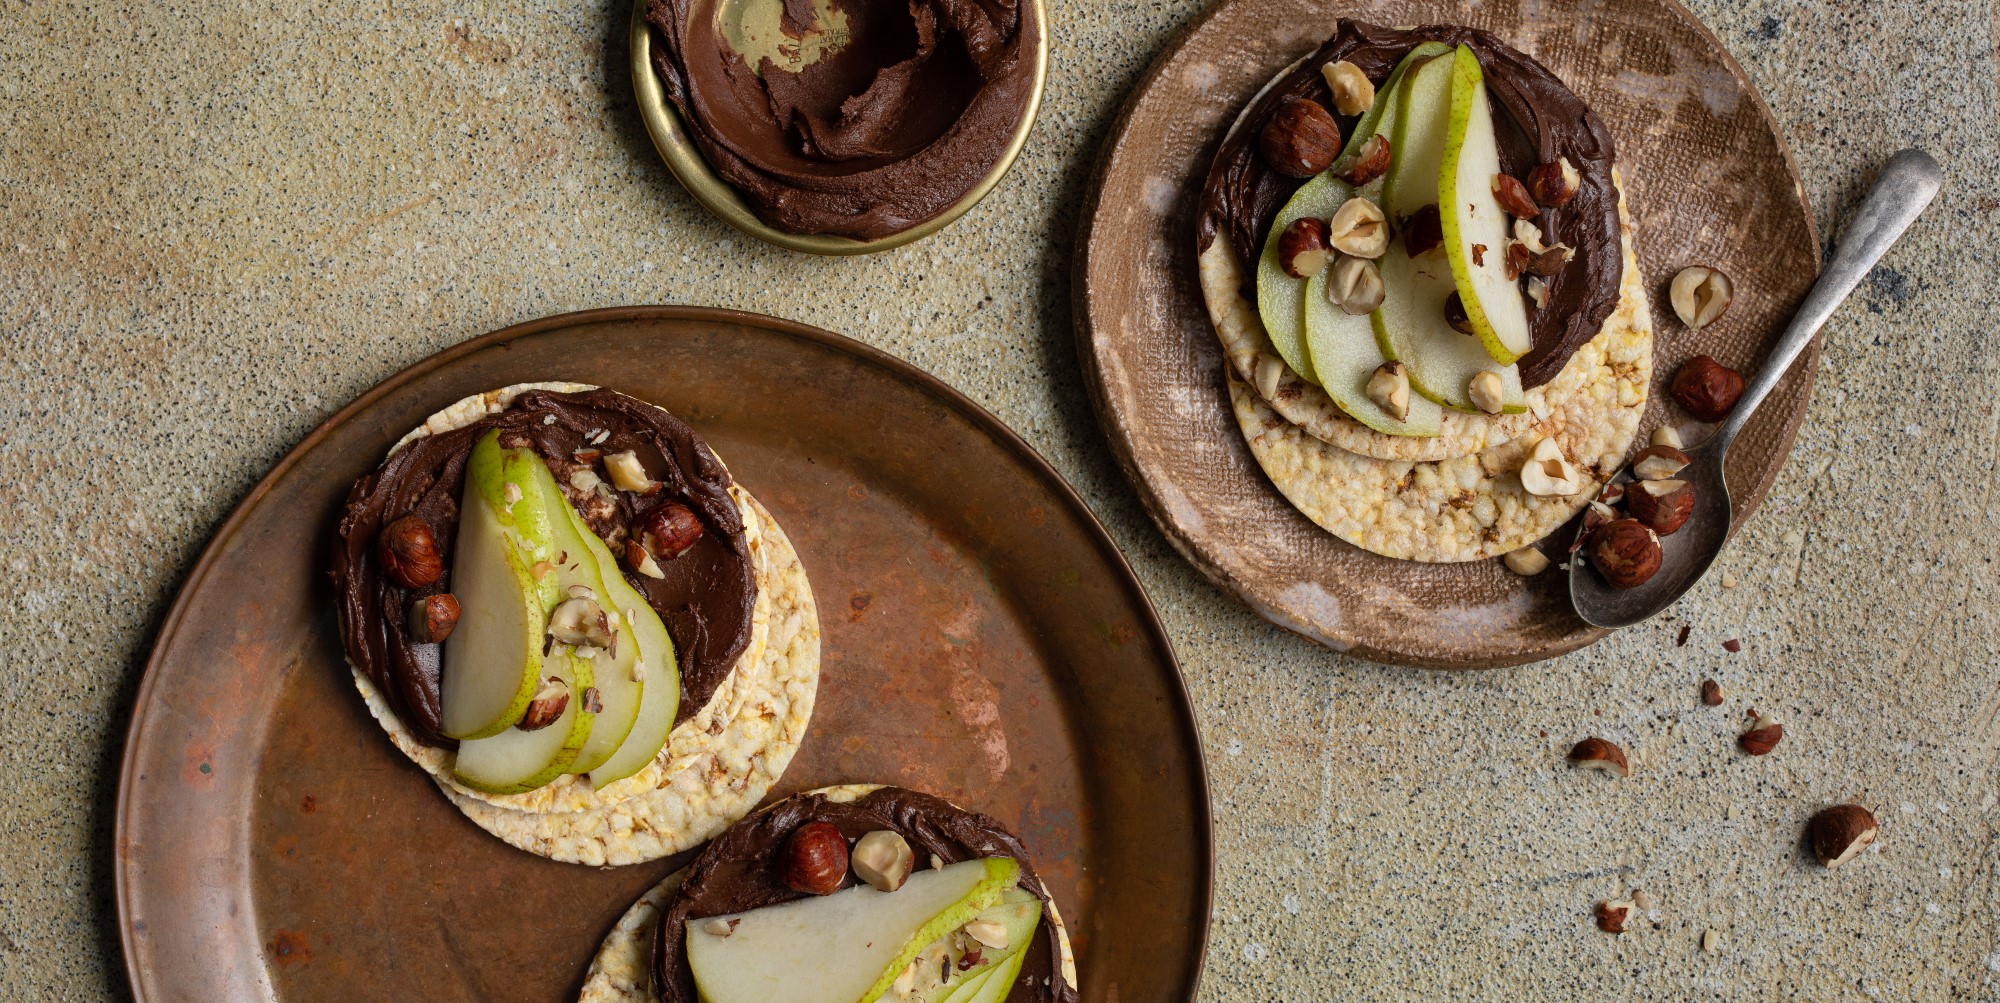 Choc hazelnut spread, pear & hazelnuts on Corn Thins slices